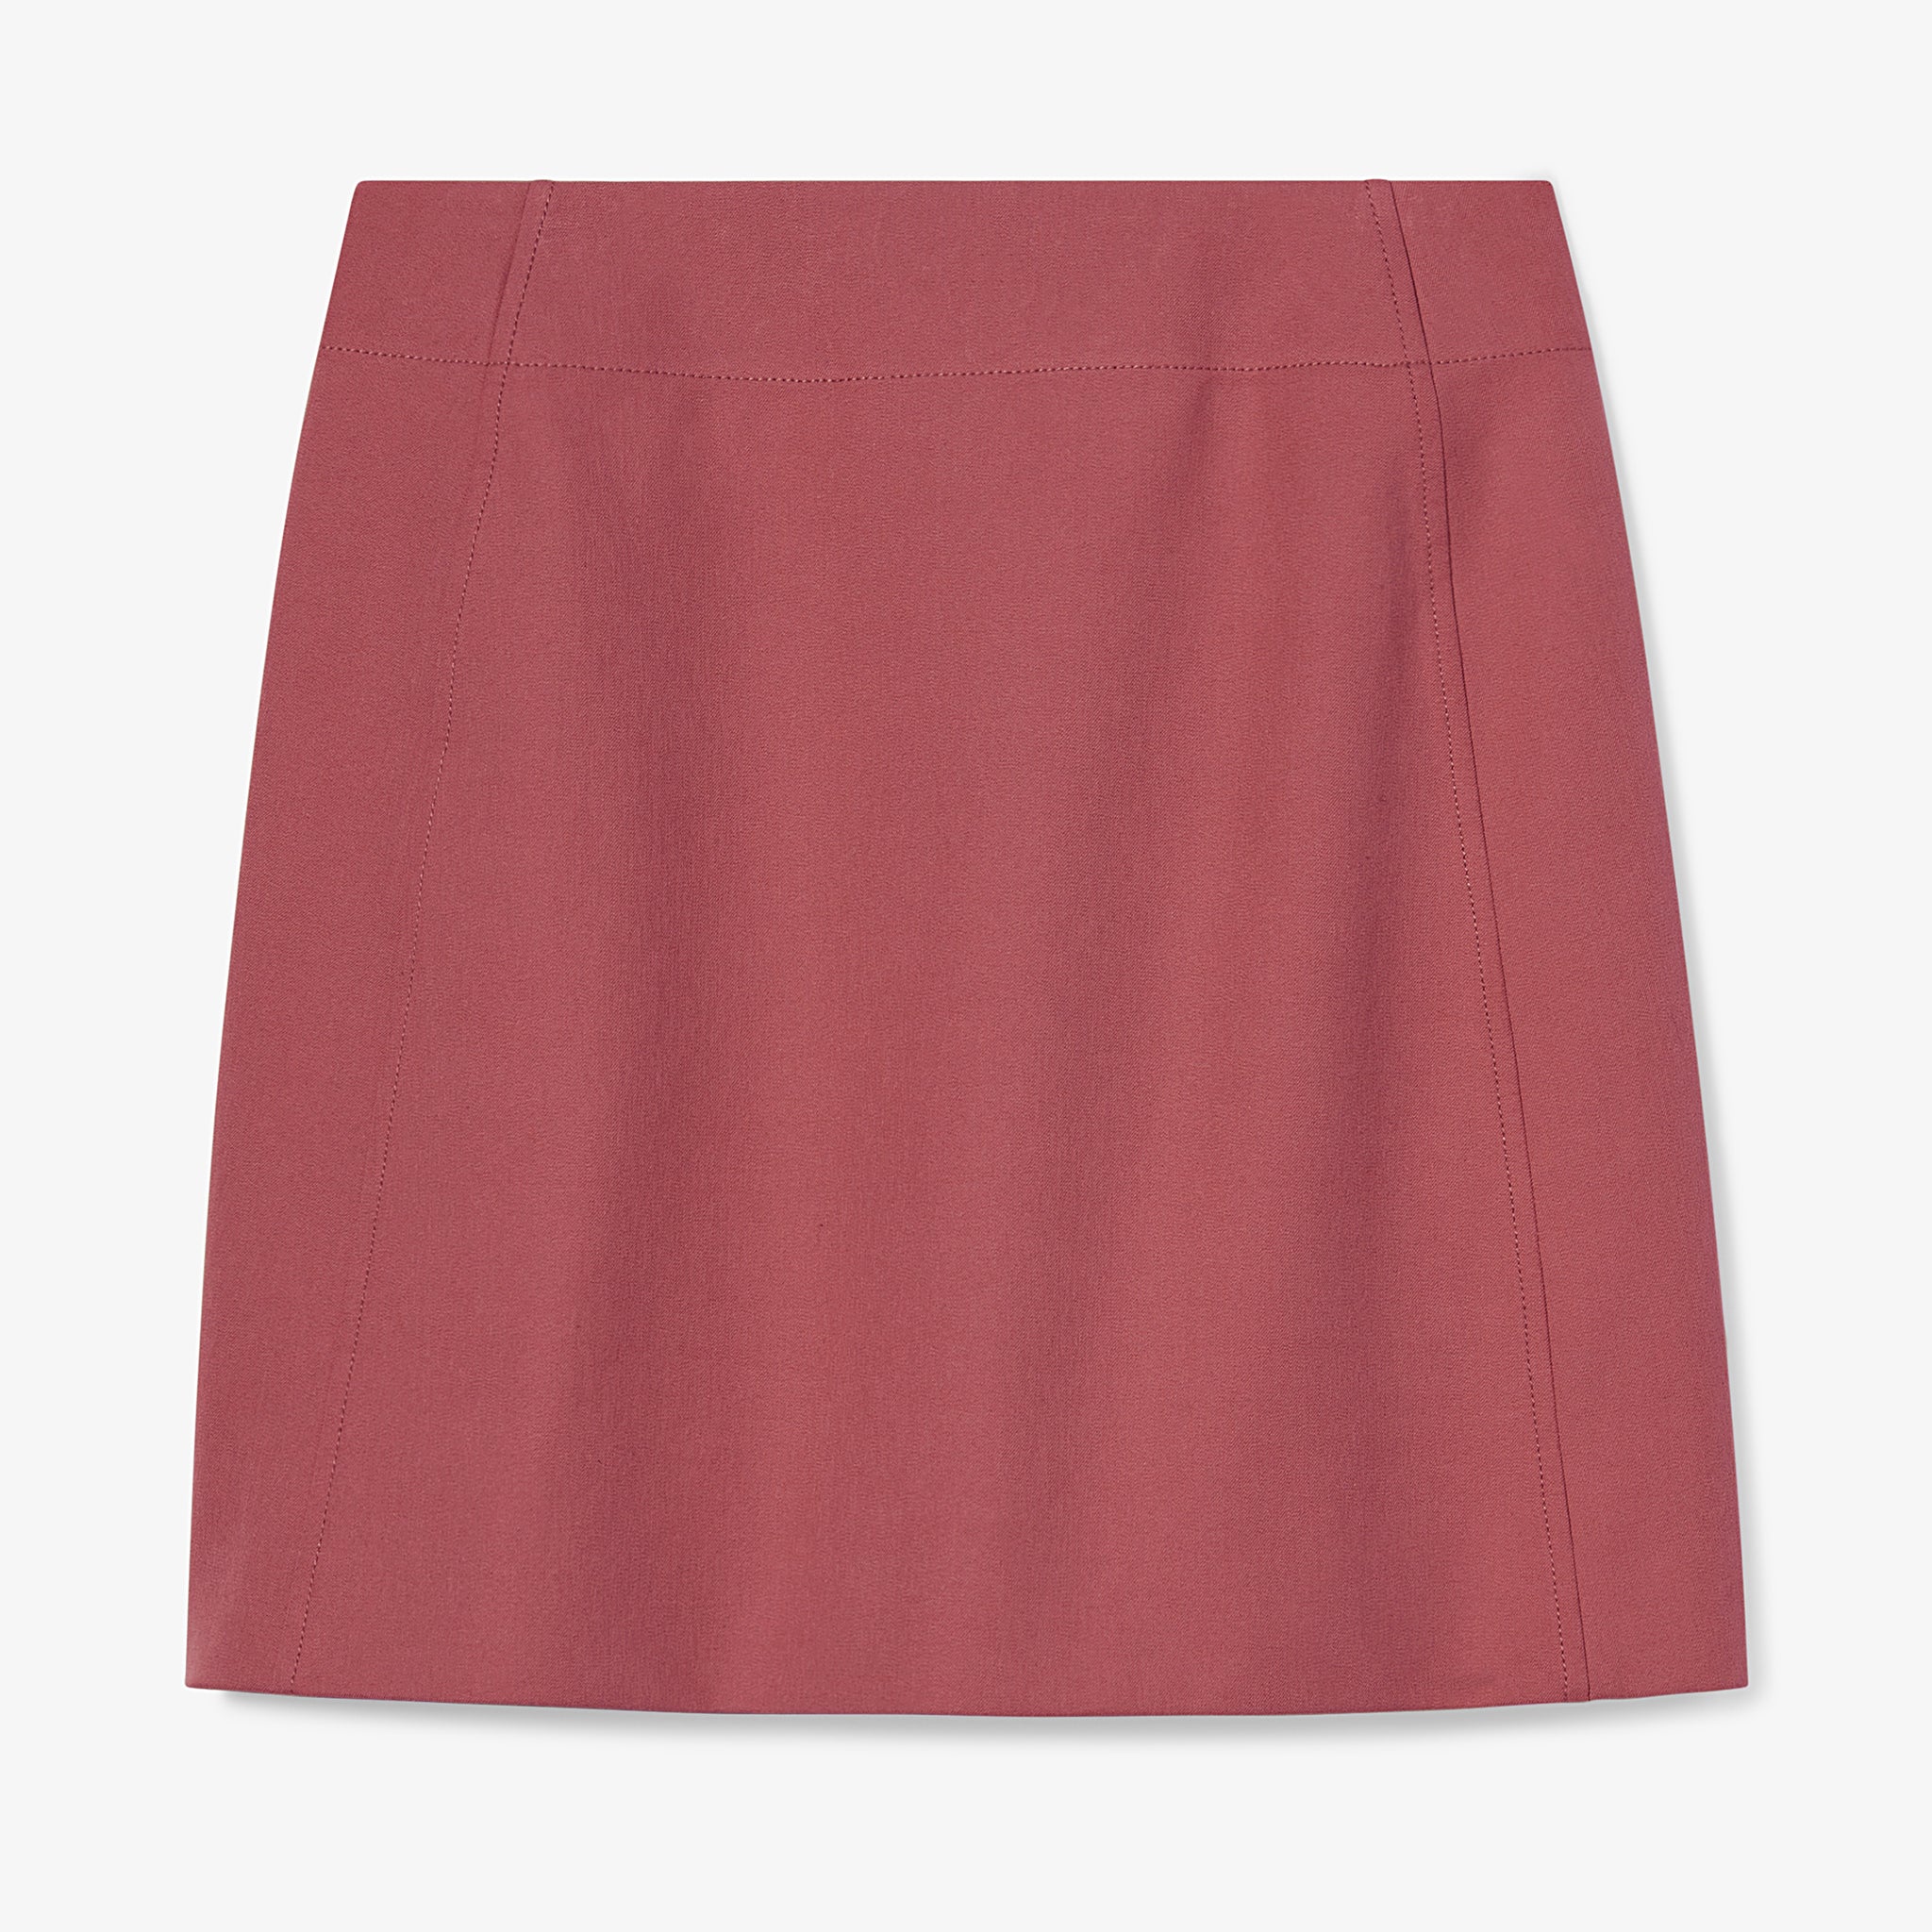 Packshot image of the rowley skirt in rosewood